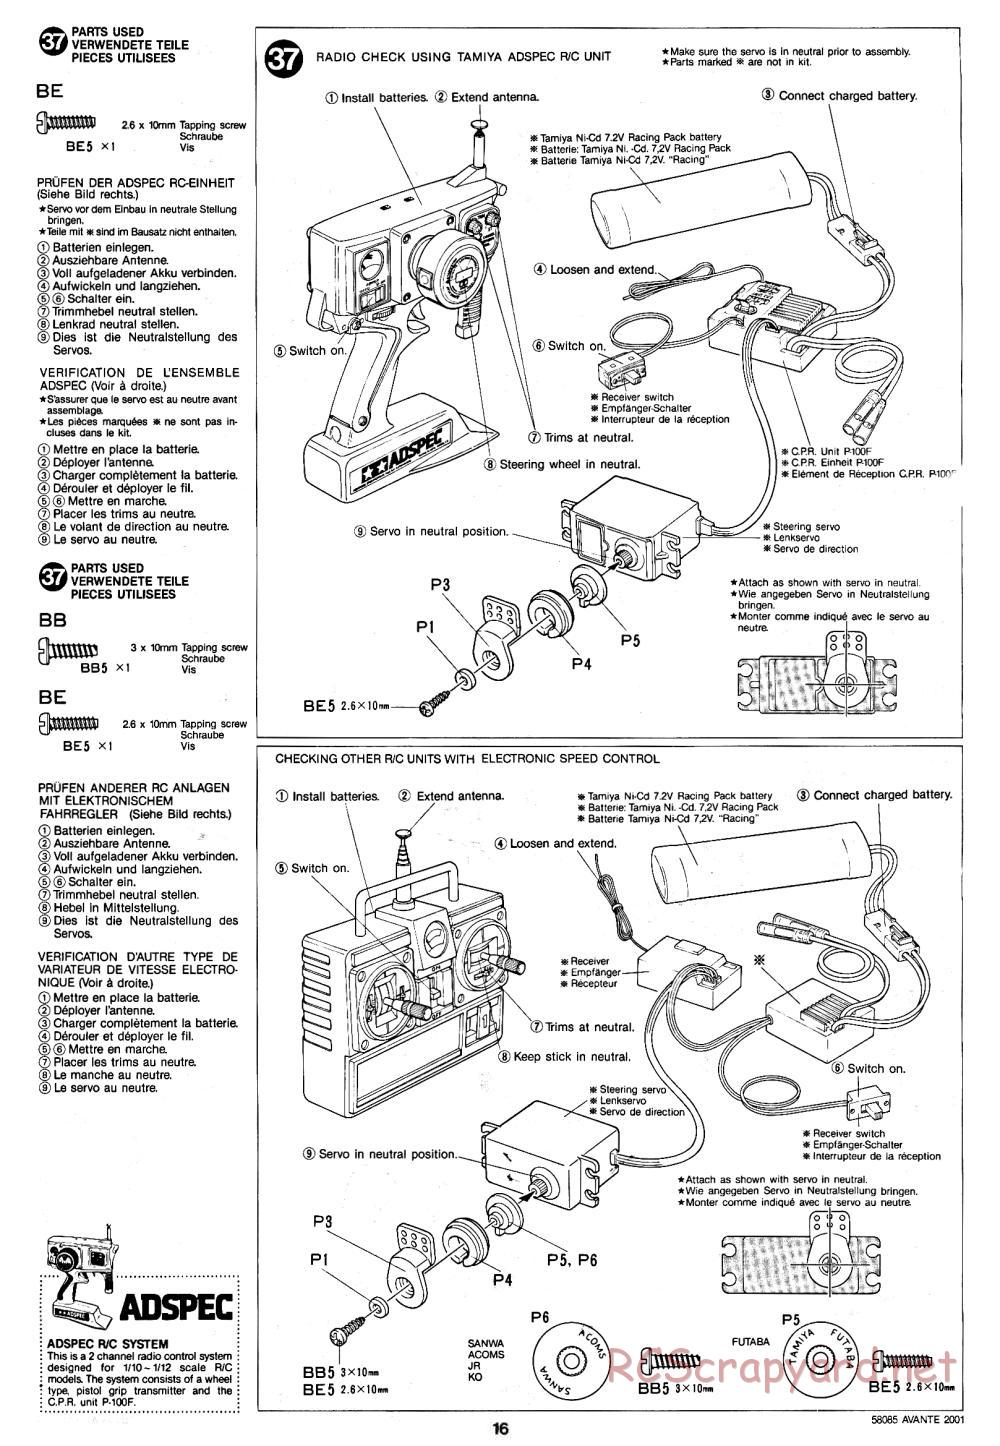 Tamiya - Avante 2001 - 58085 - Manual - Page 16